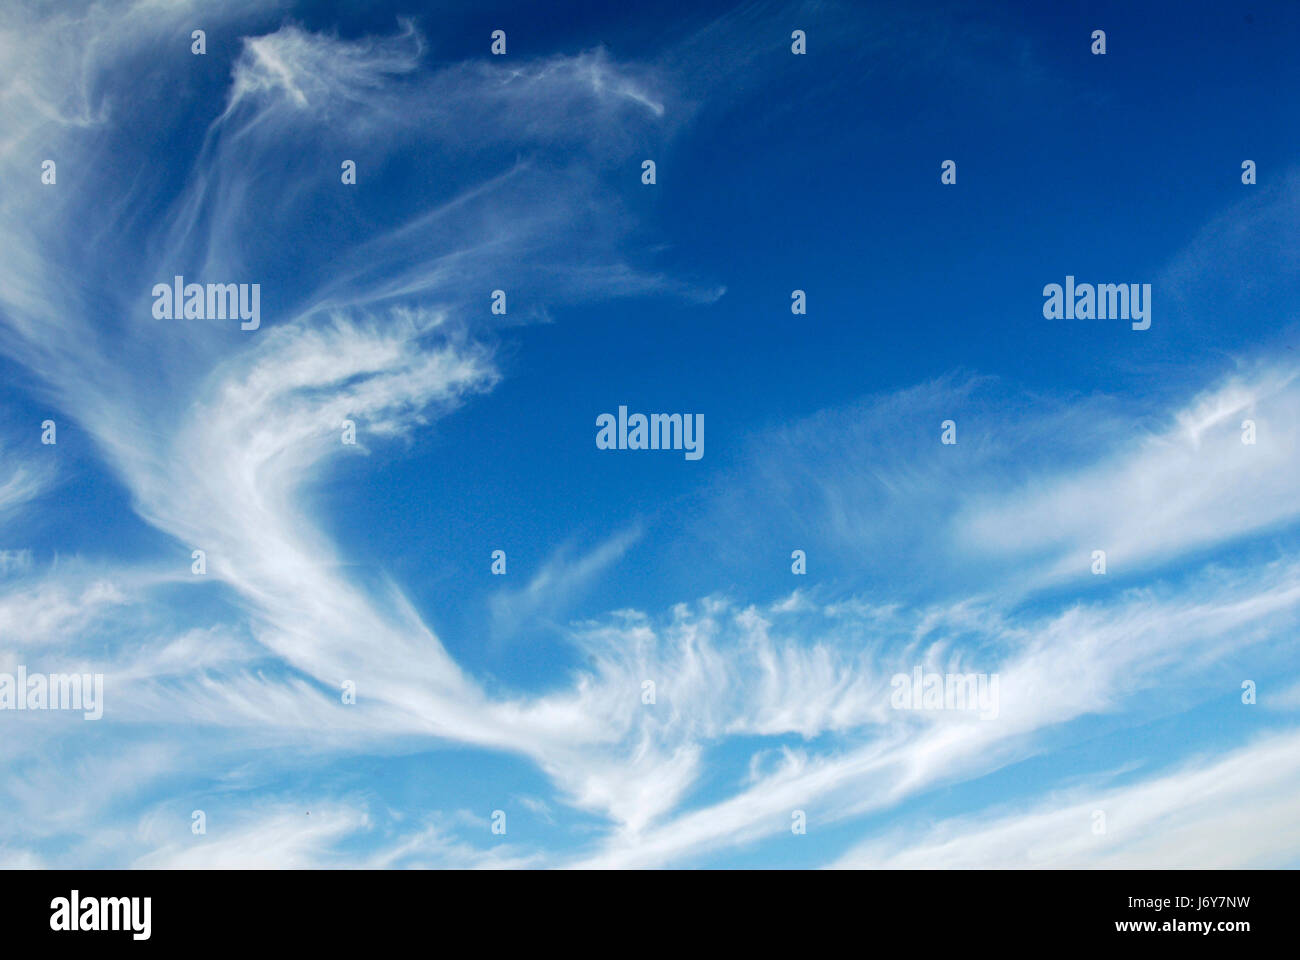 Firmamento nubes del cielo de verano azul cielo nubes schleierwolken summerly firmamento Foto de stock